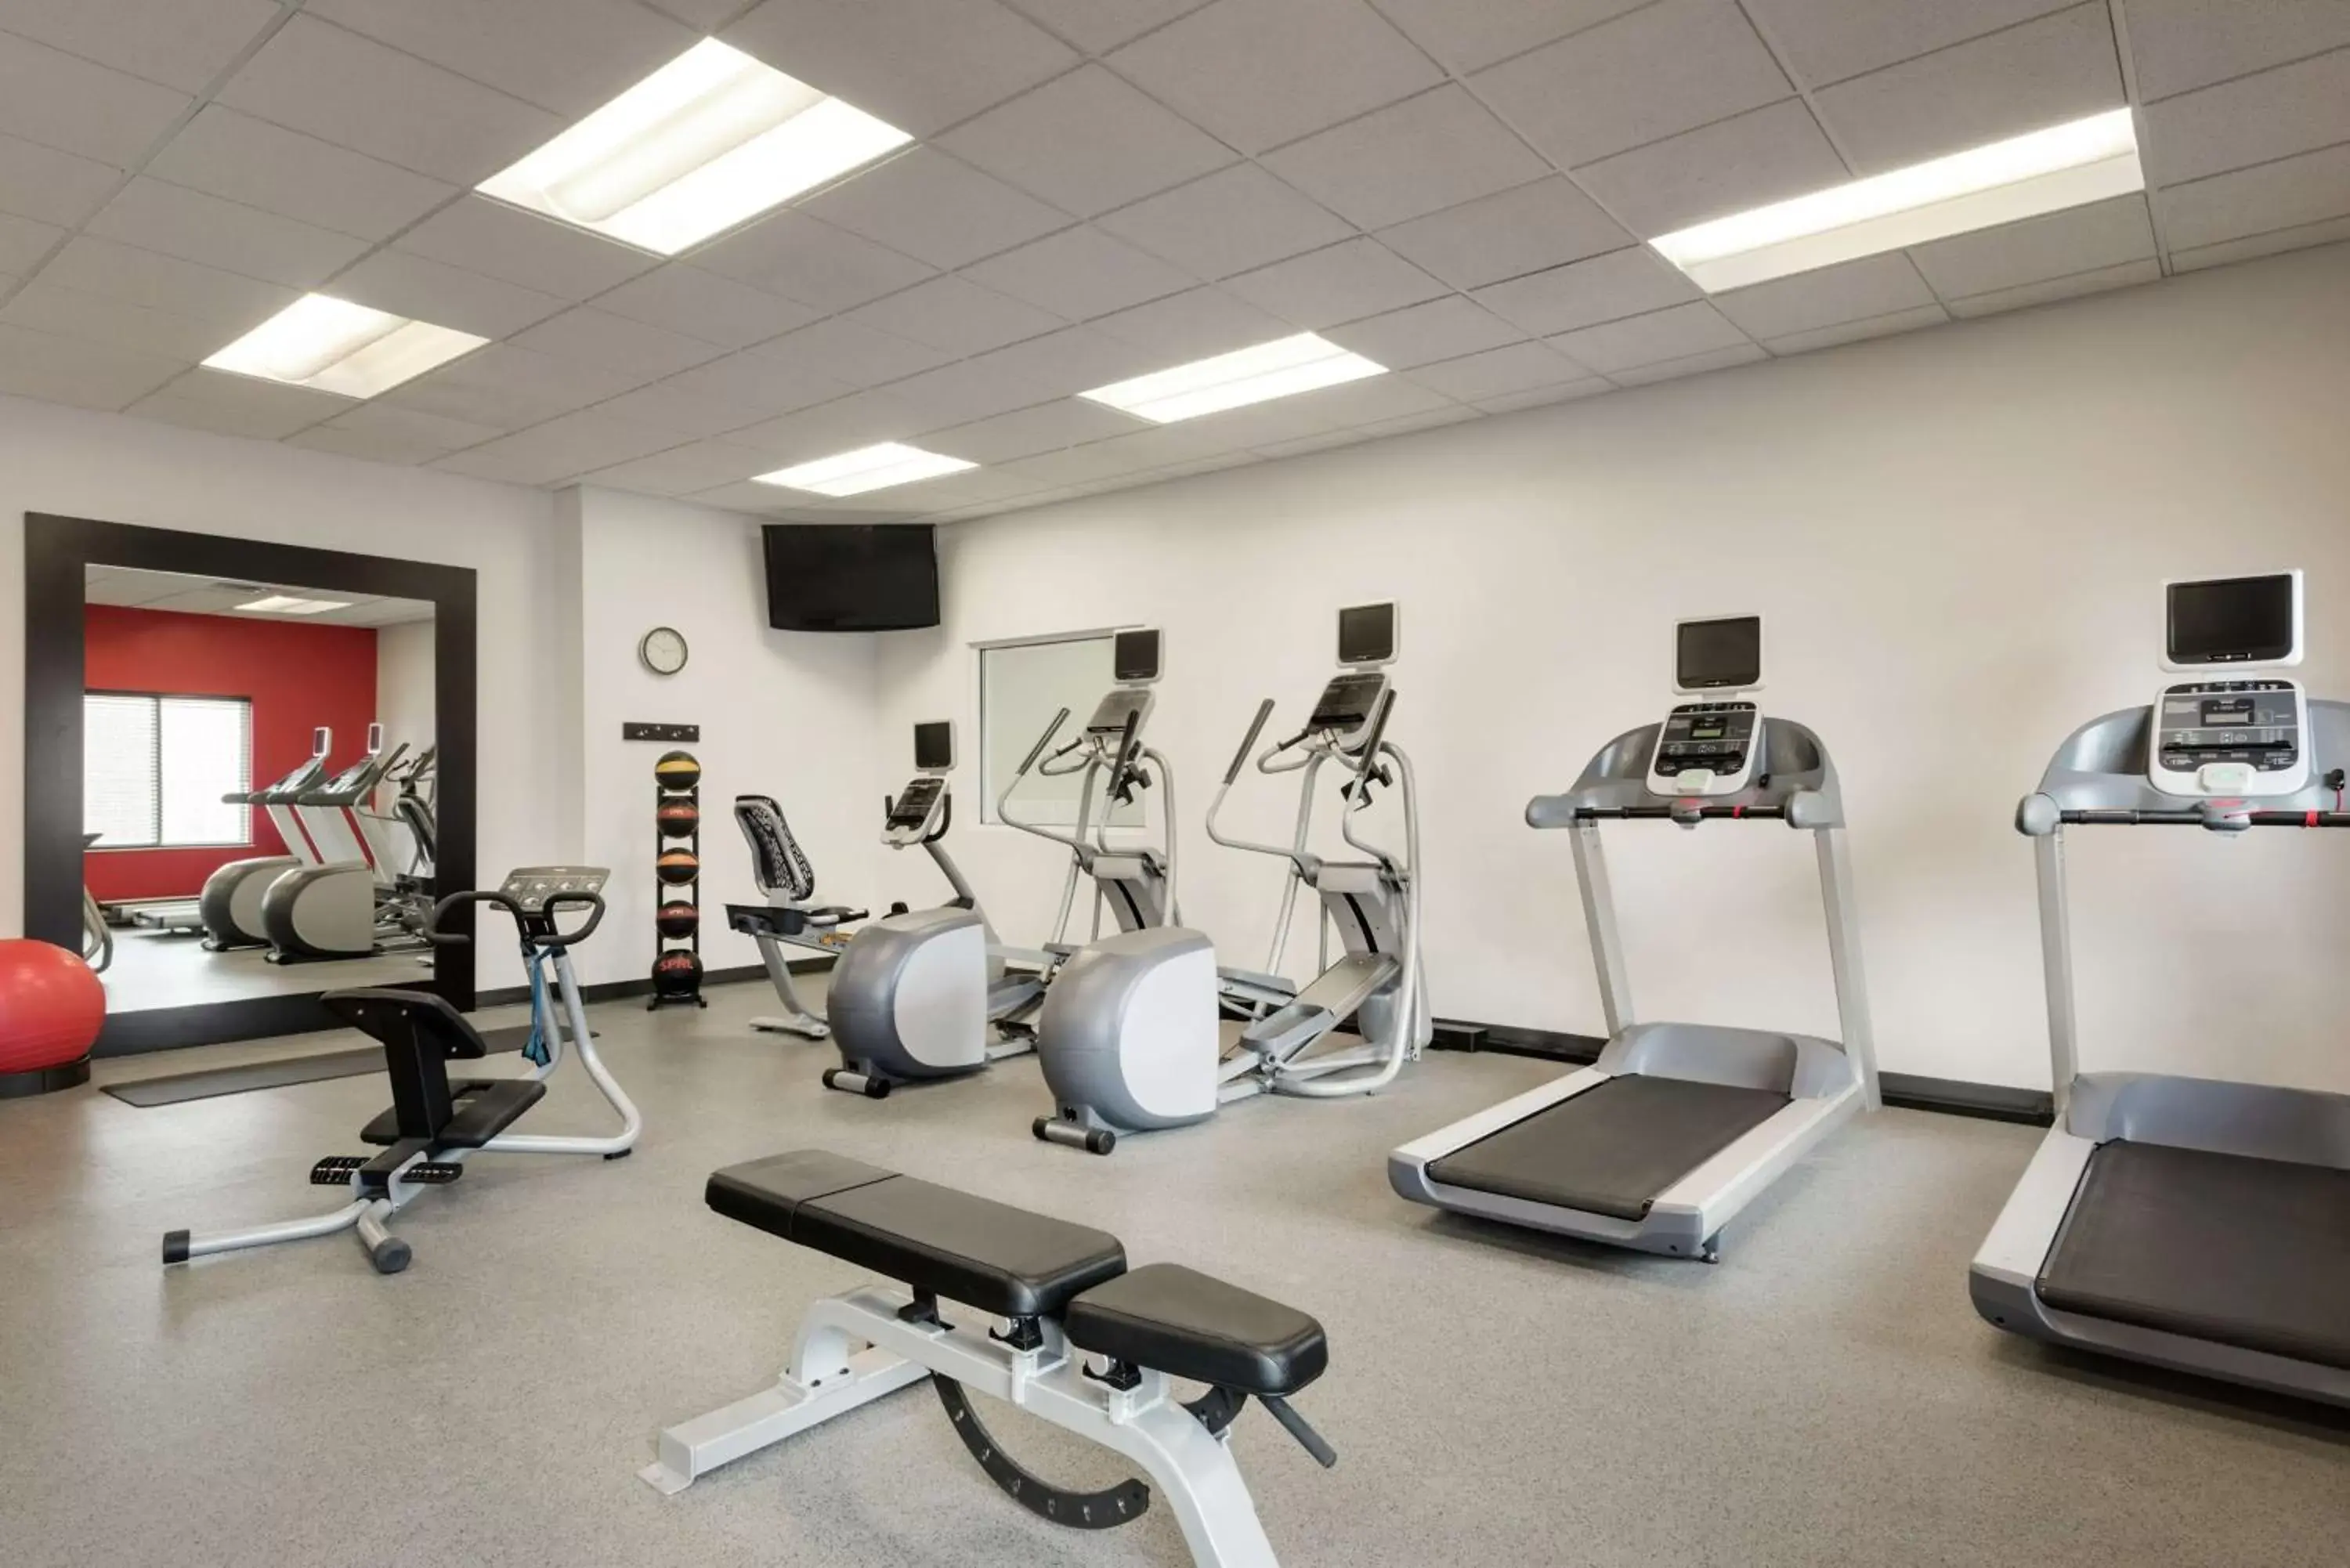 Fitness centre/facilities, Fitness Center/Facilities in Hilton Garden Inn Dubuque Downtown